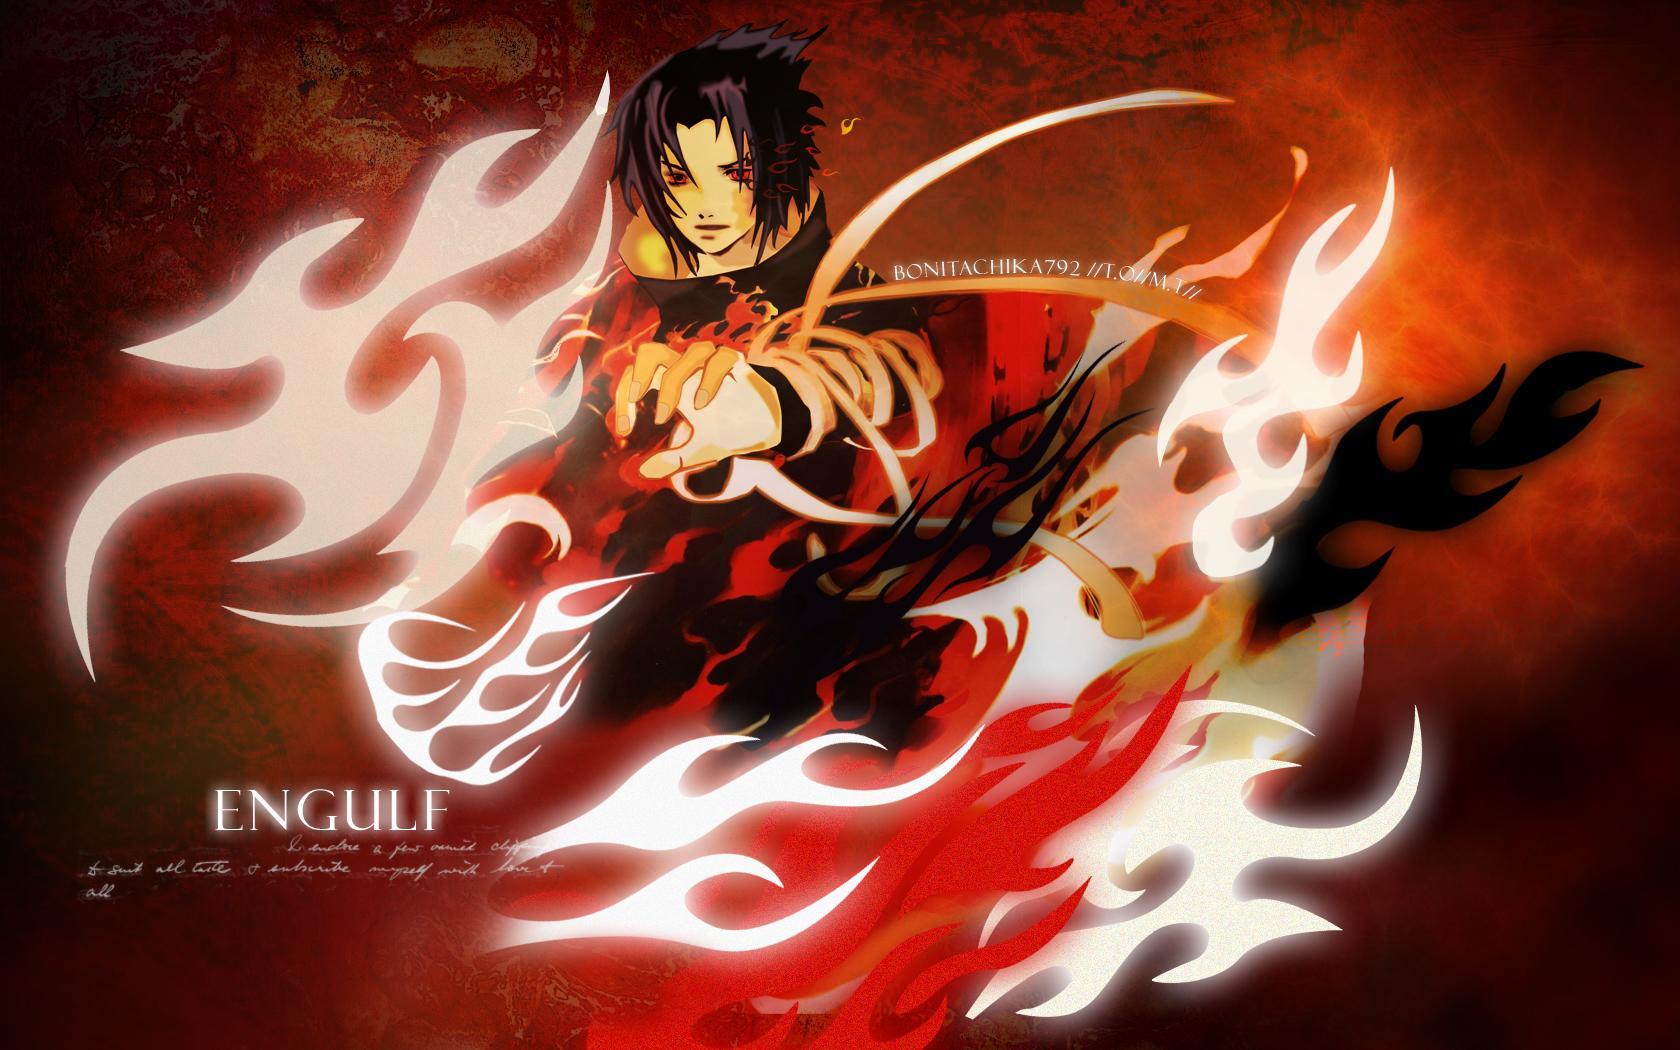 sasuke wallpaper,cg artwork,anime,fictional character,graphic design,graphics